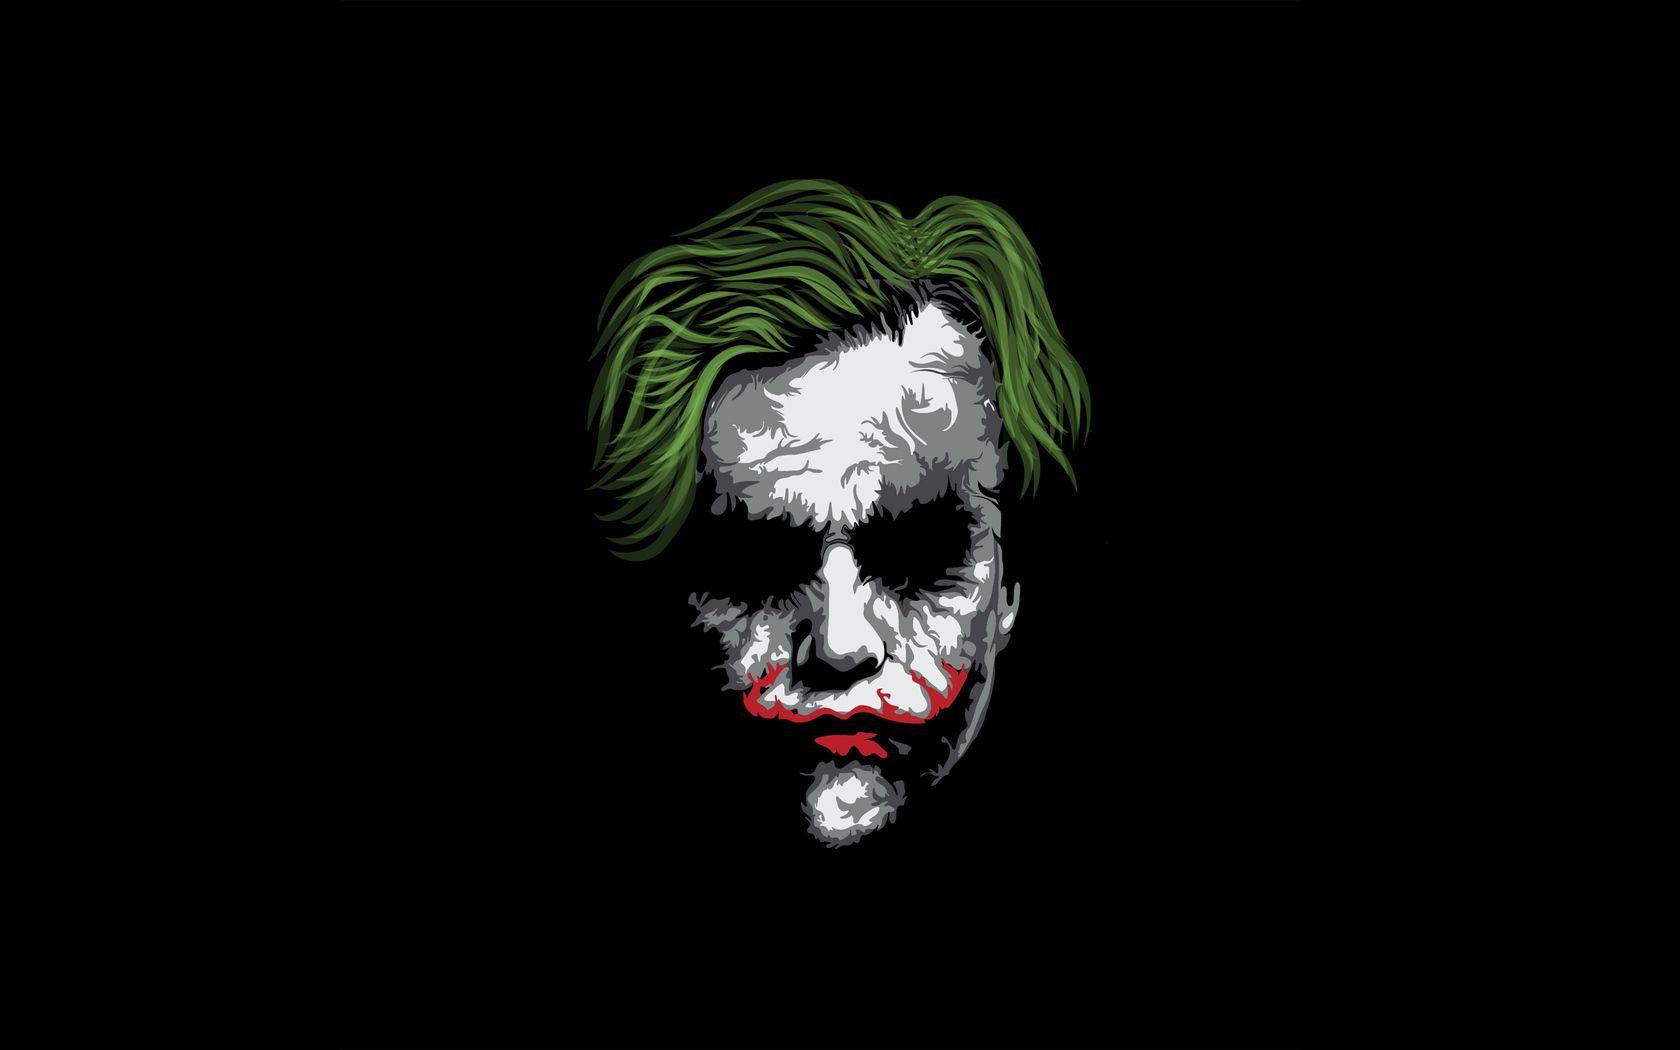 Joker Minimalist Wallpapers - Top Free Joker Minimalist Backgrounds ...